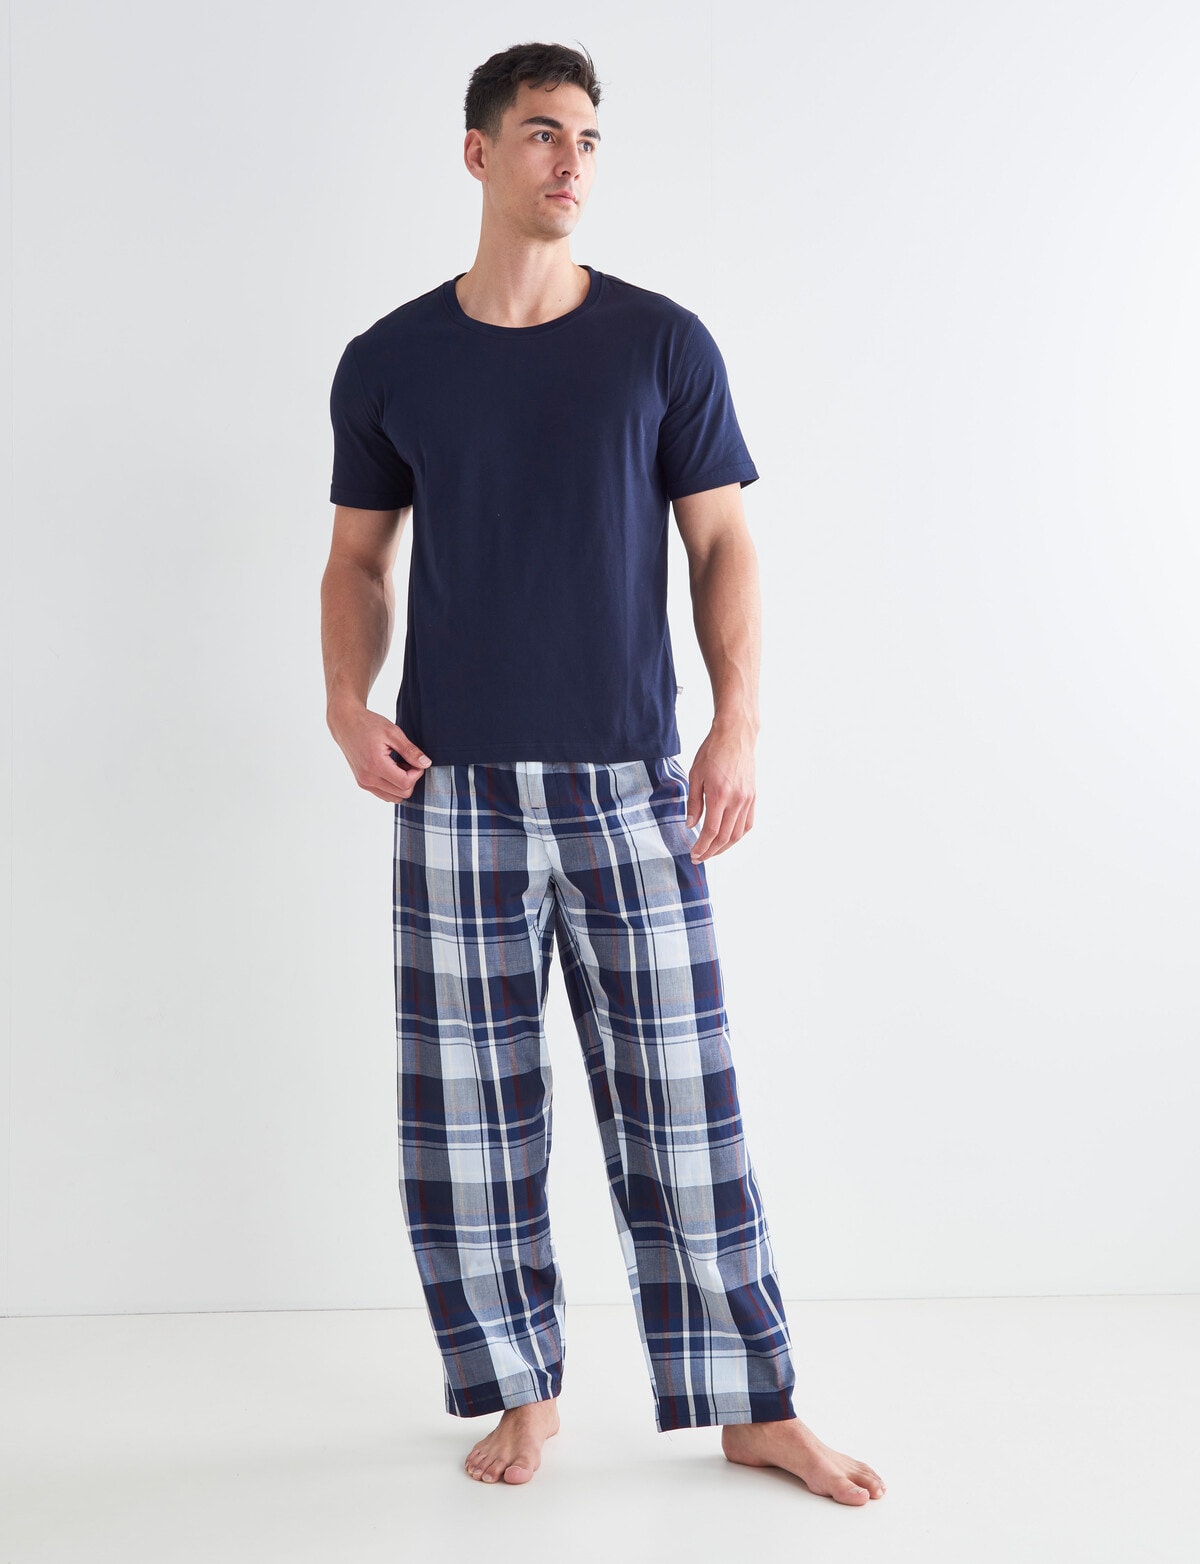 Sleepy Joes Mens Nightshirt Nightwear Sleepwear Lightweight Cotton M-3XL